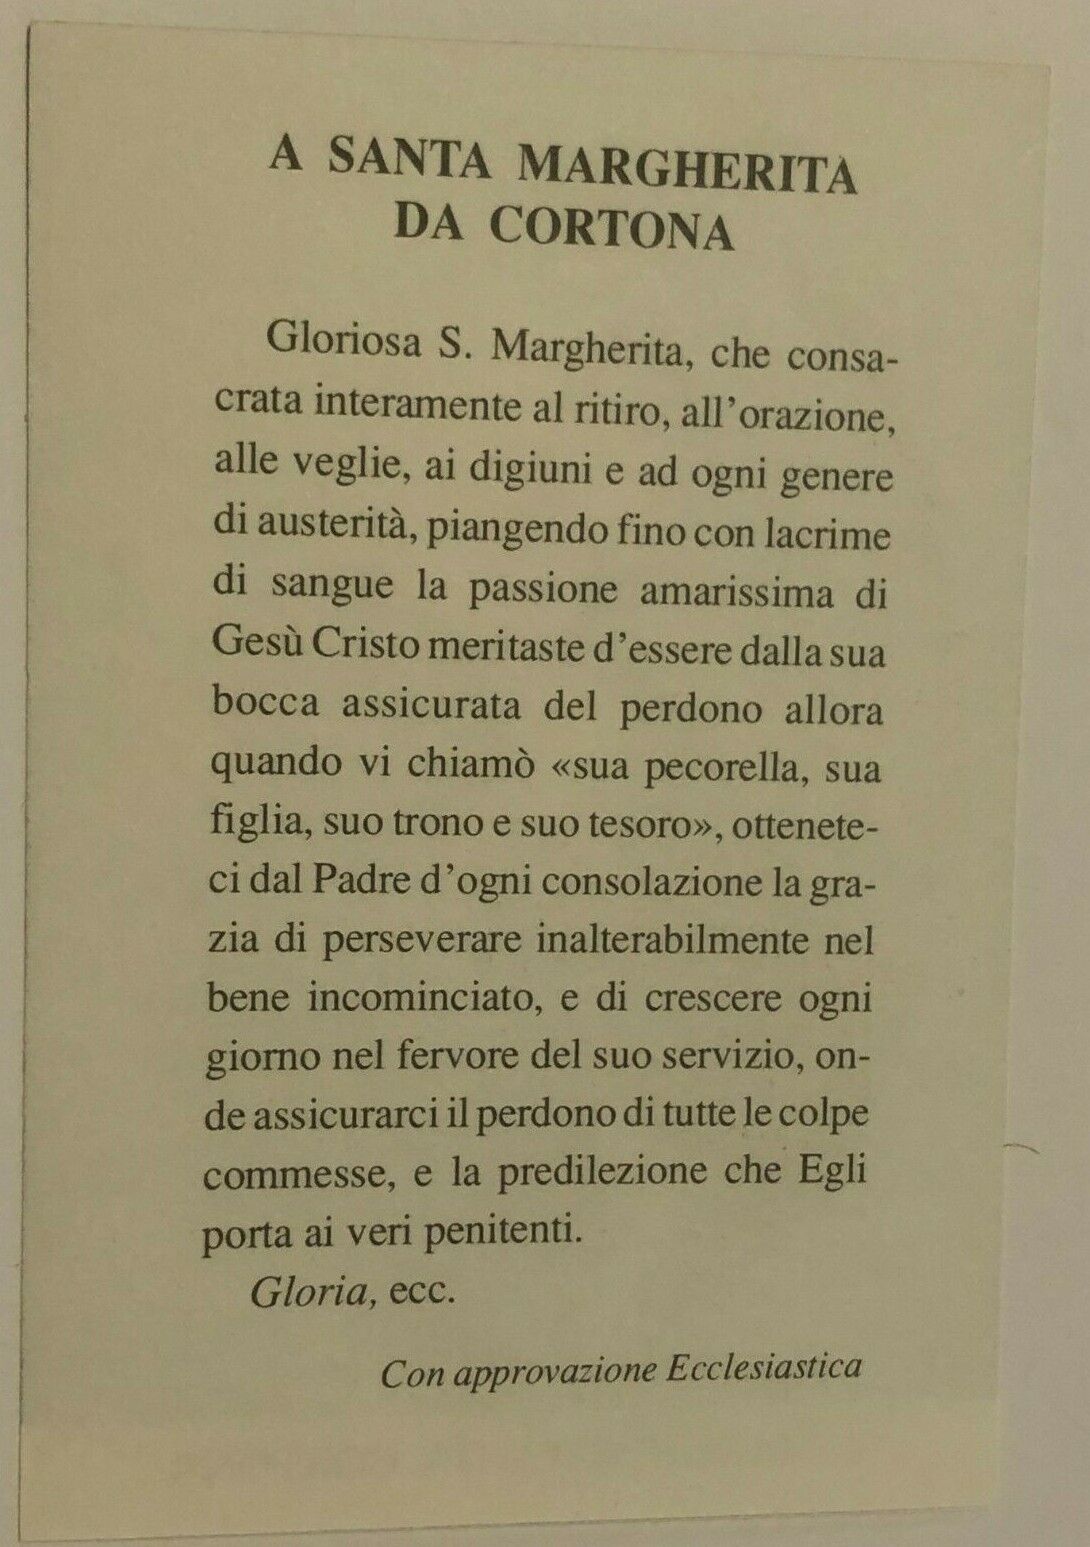 Saint Margaret of Cortona/S. Margherita da Cortona Prayer  Card in Italian, New